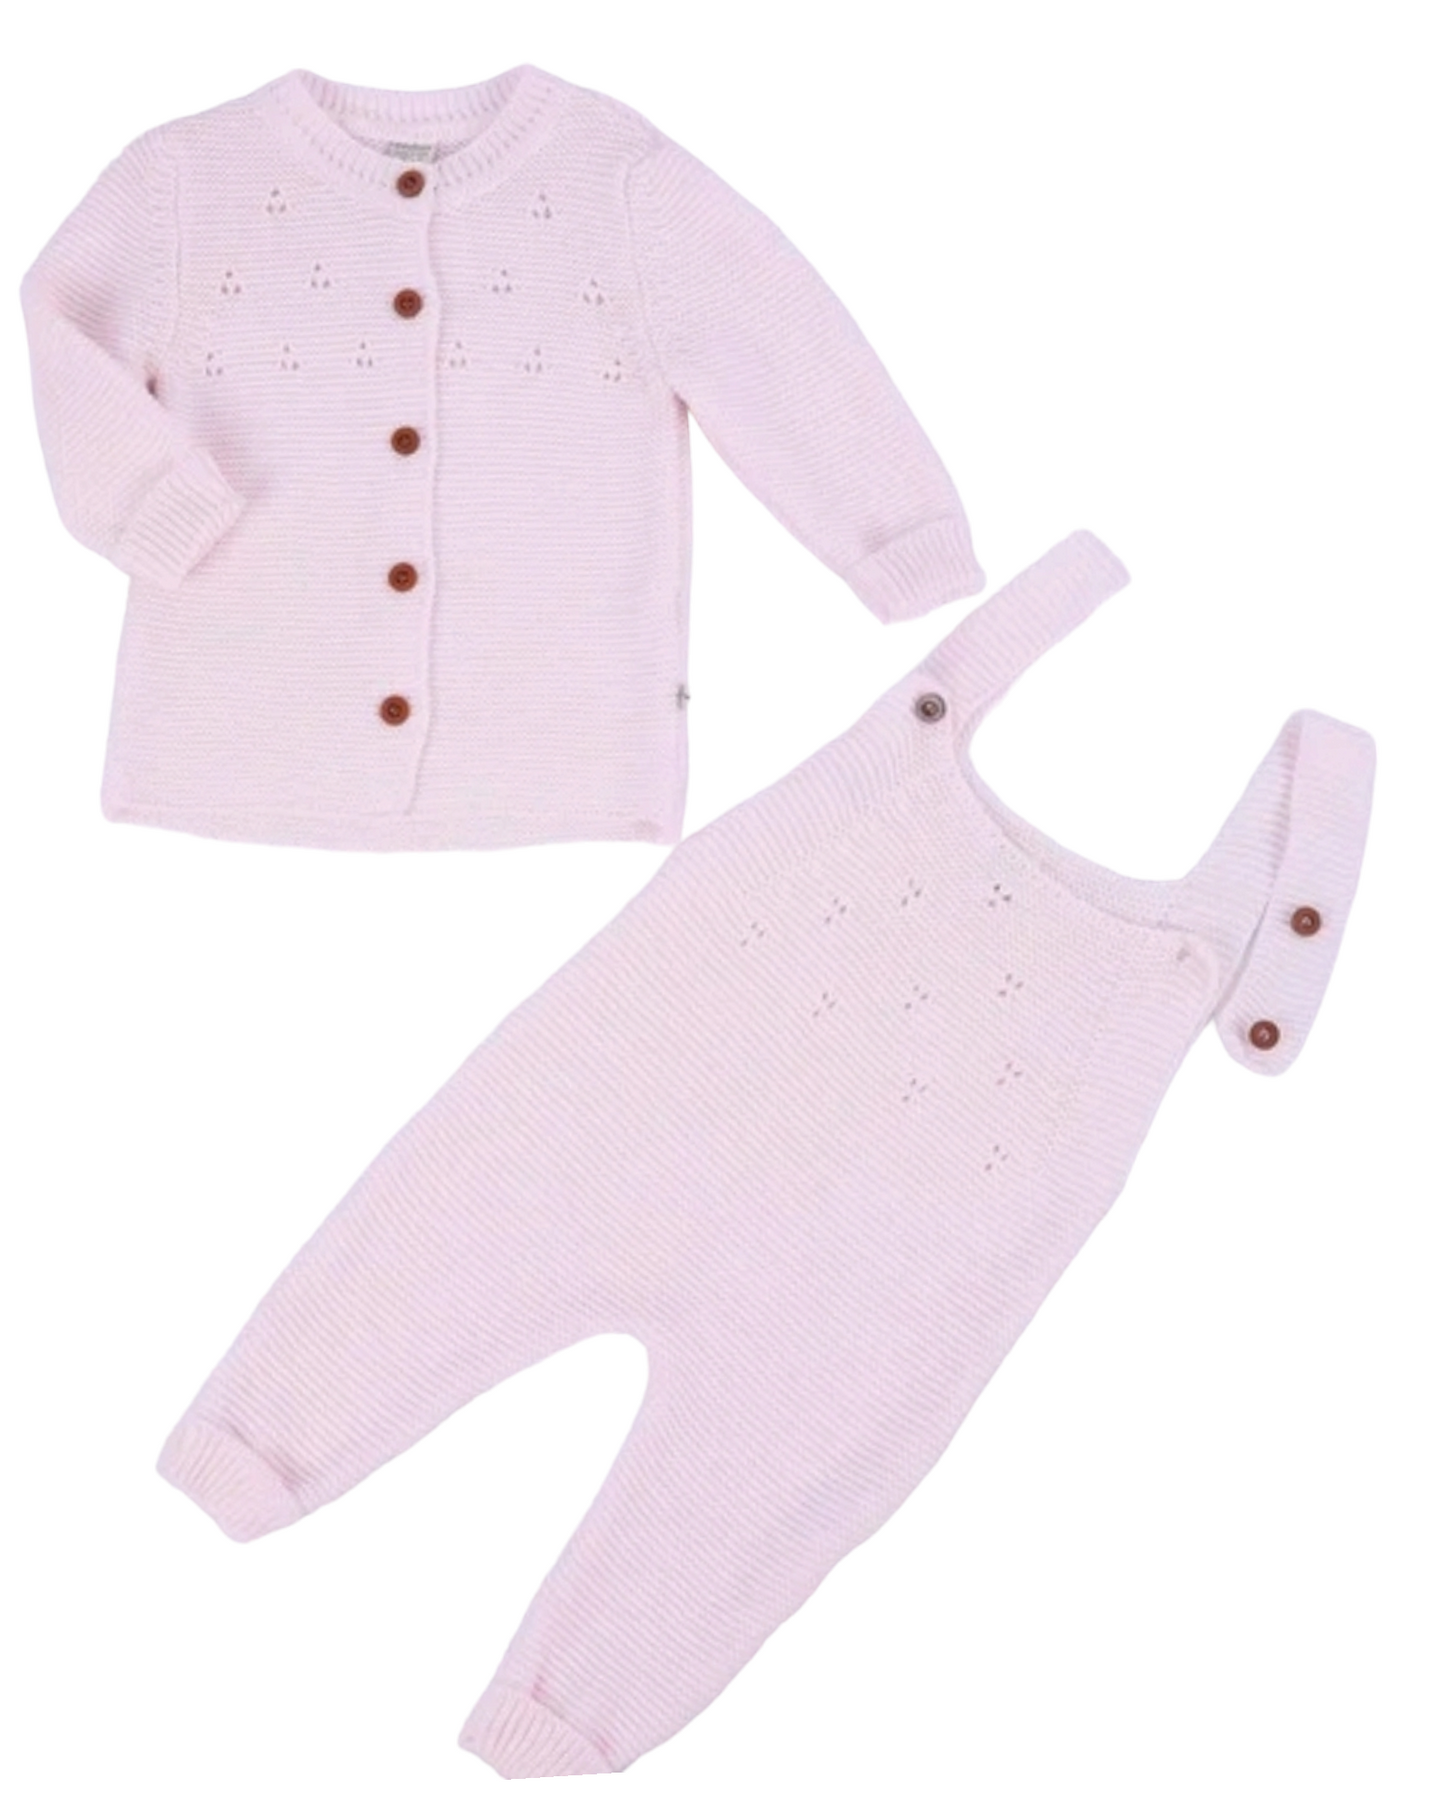 Organic Little One Knitted Dungaree & Cardigan Set -Pastel pink